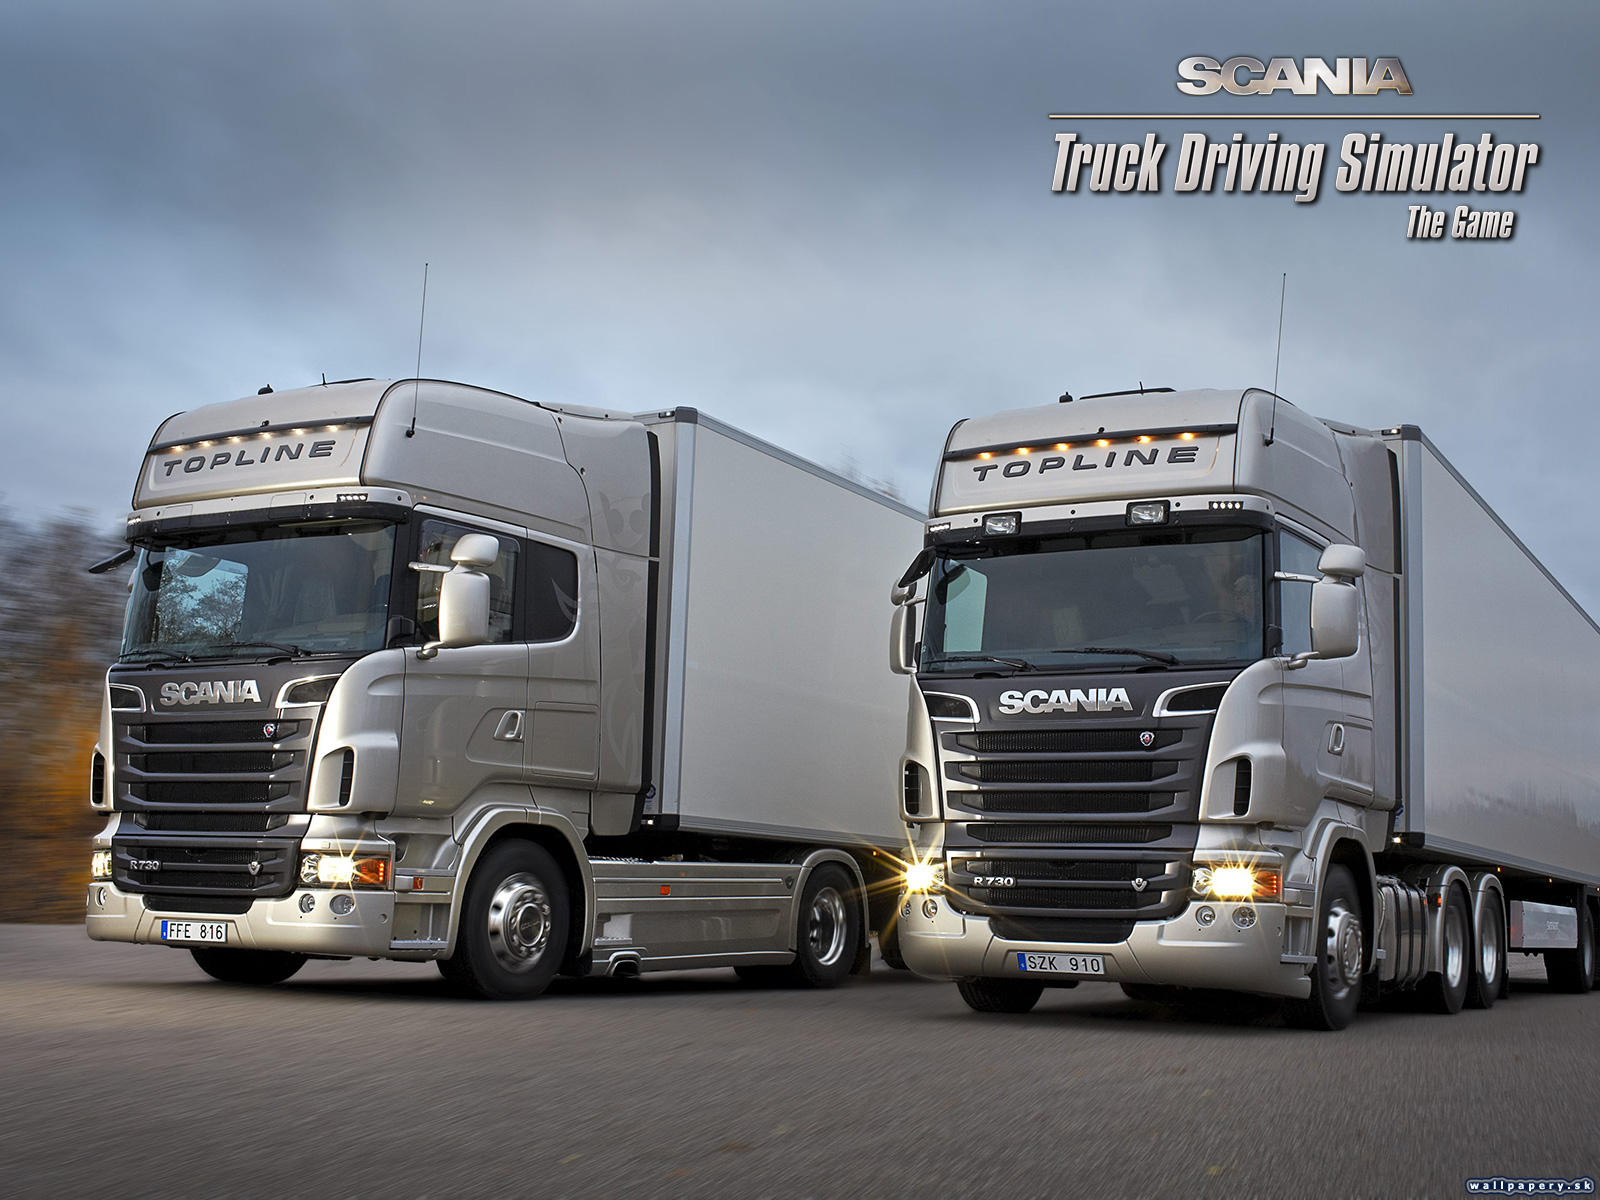 Scania Truck Driving Simulator - The Game - wallpaper 5